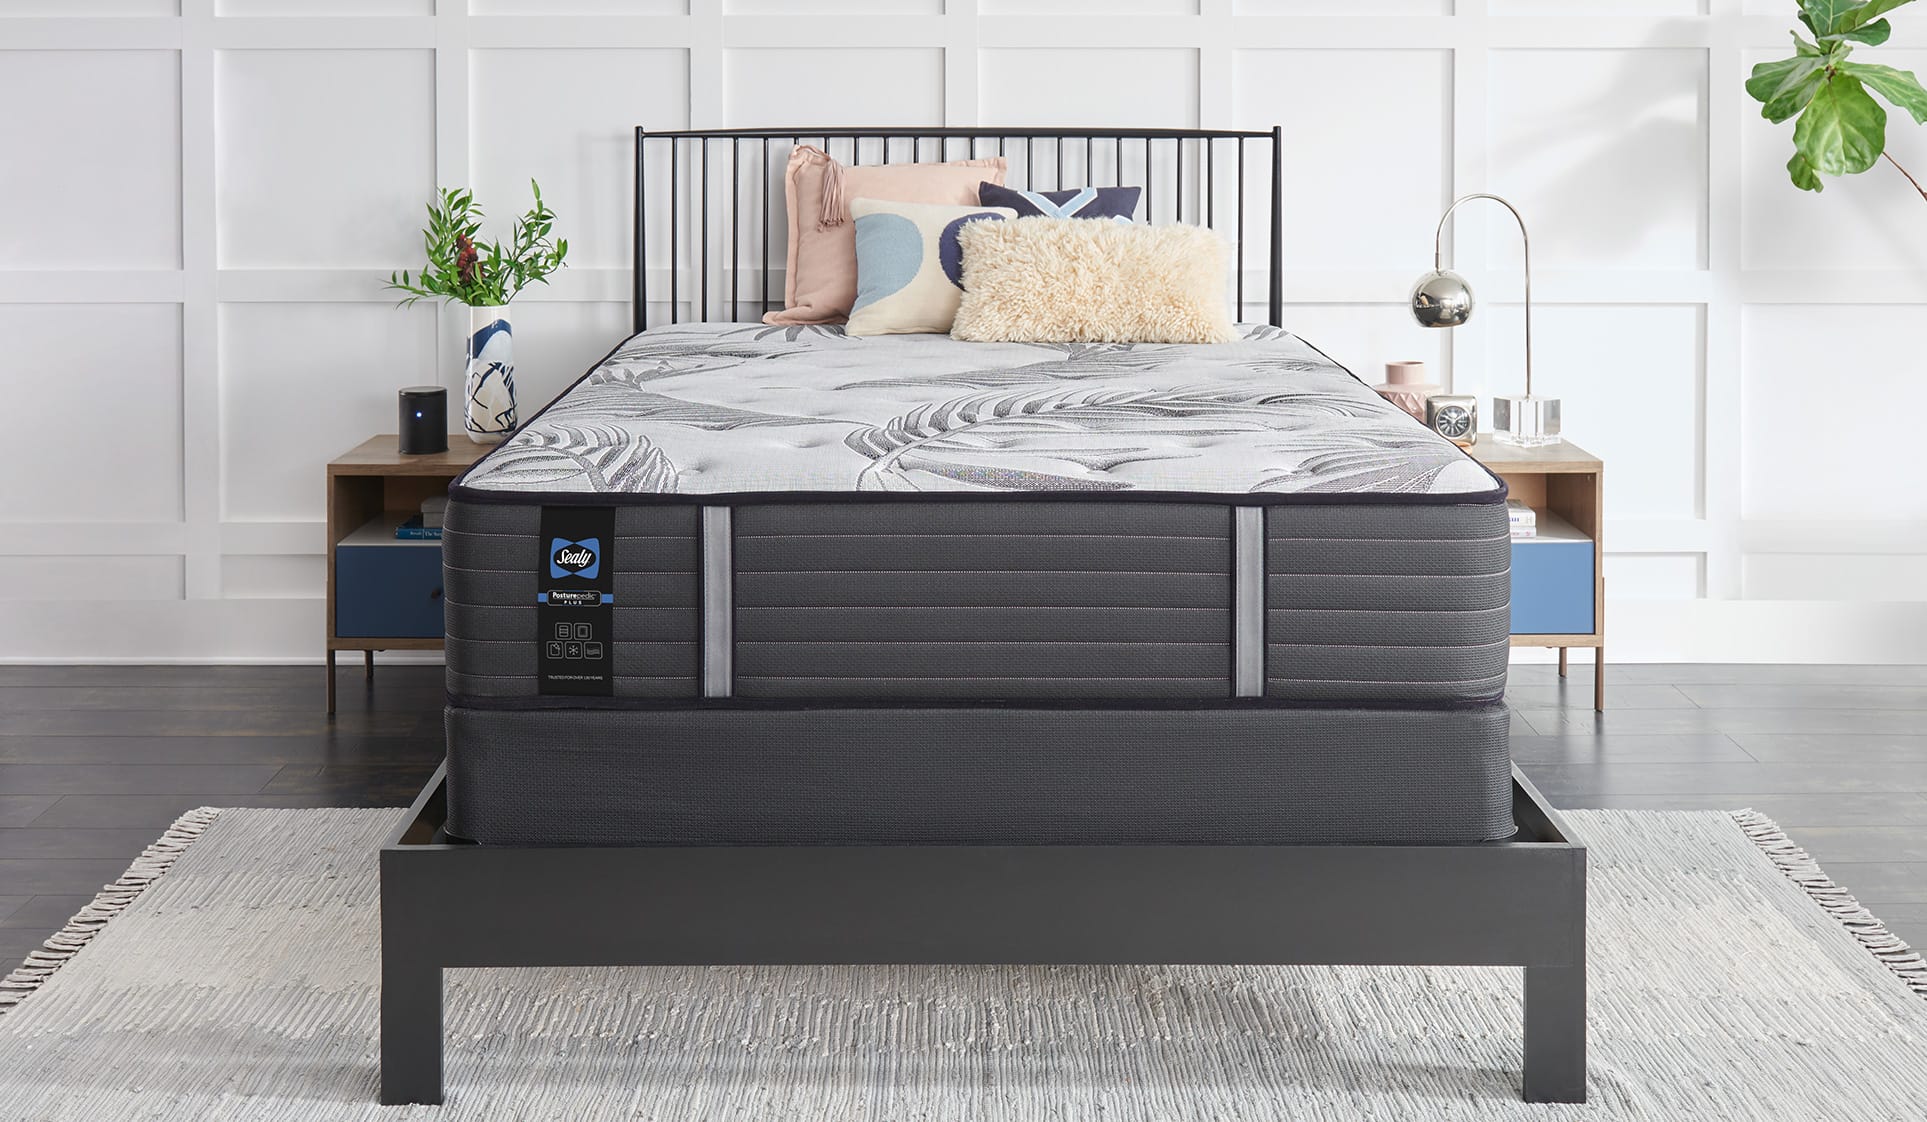 Sealy Posturepedic® Plus mattress in a bedroom